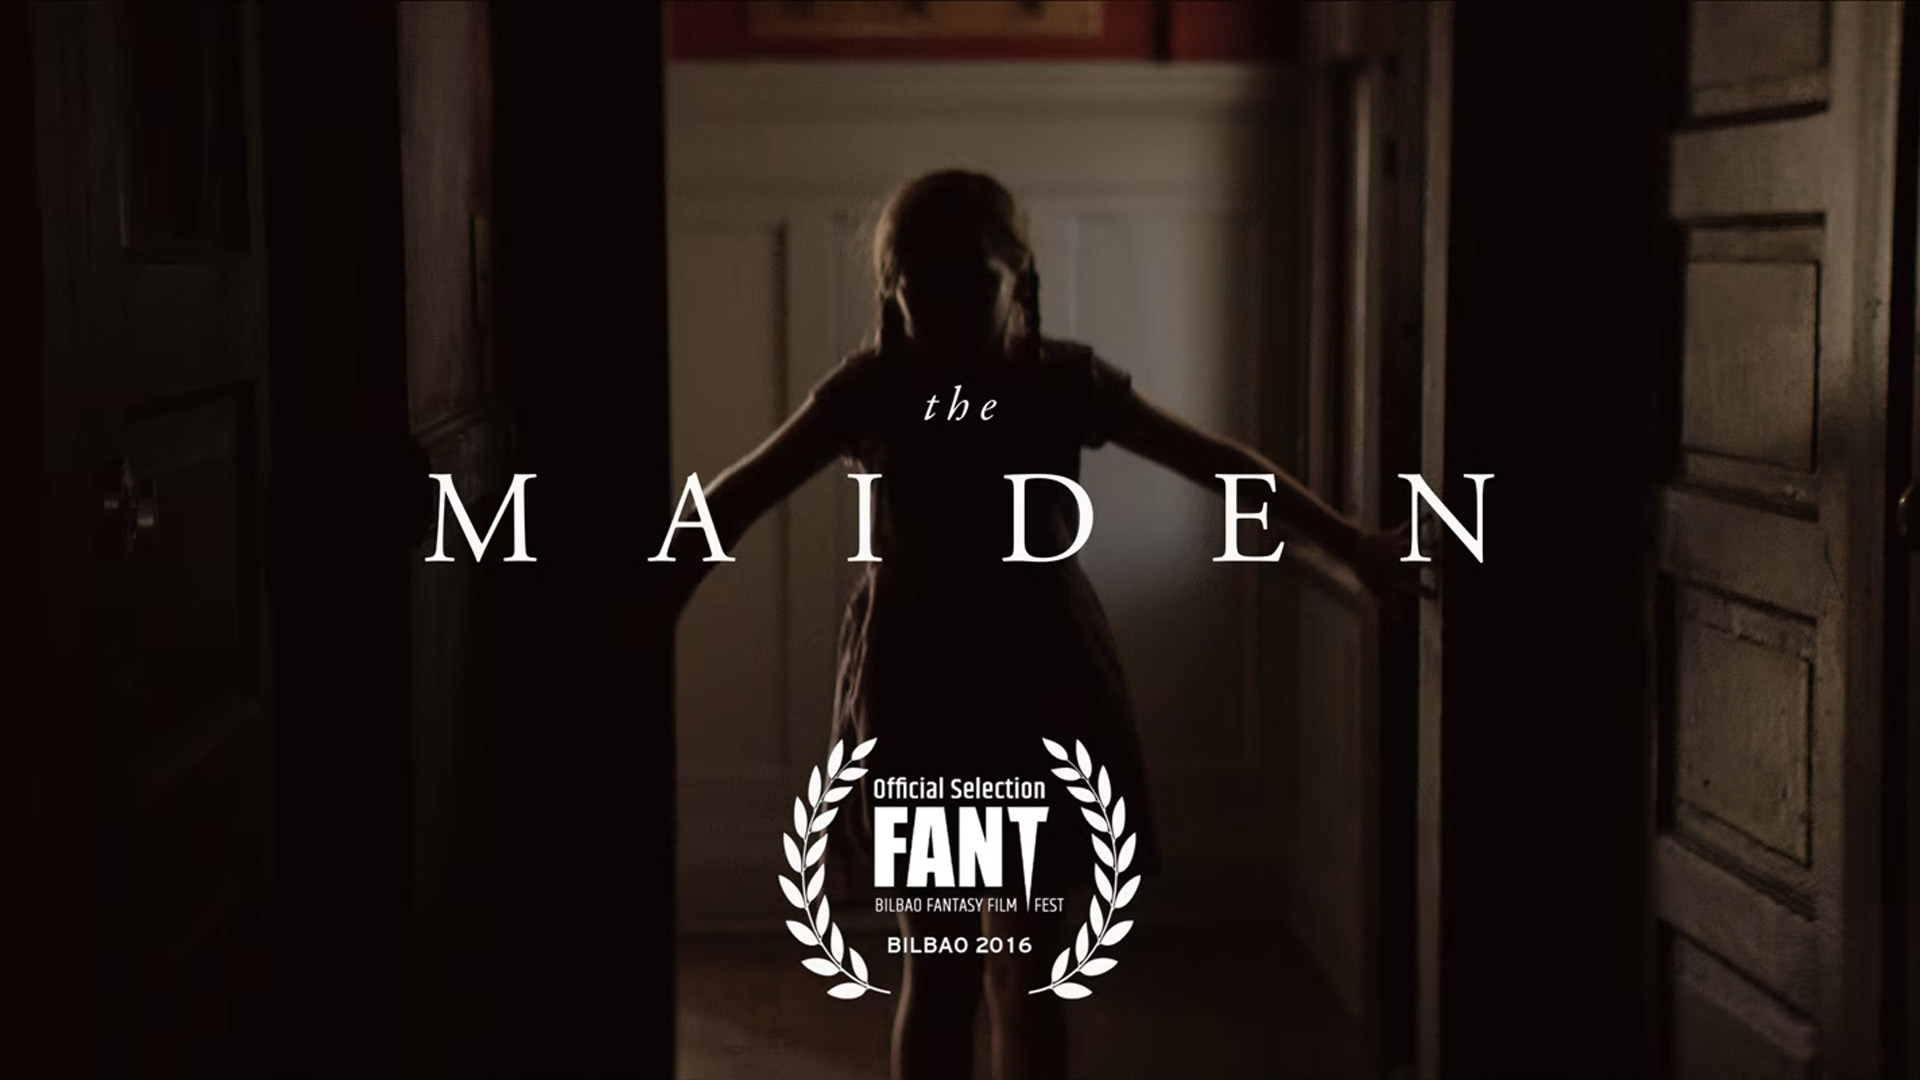 THE MAIDEN – short horror film